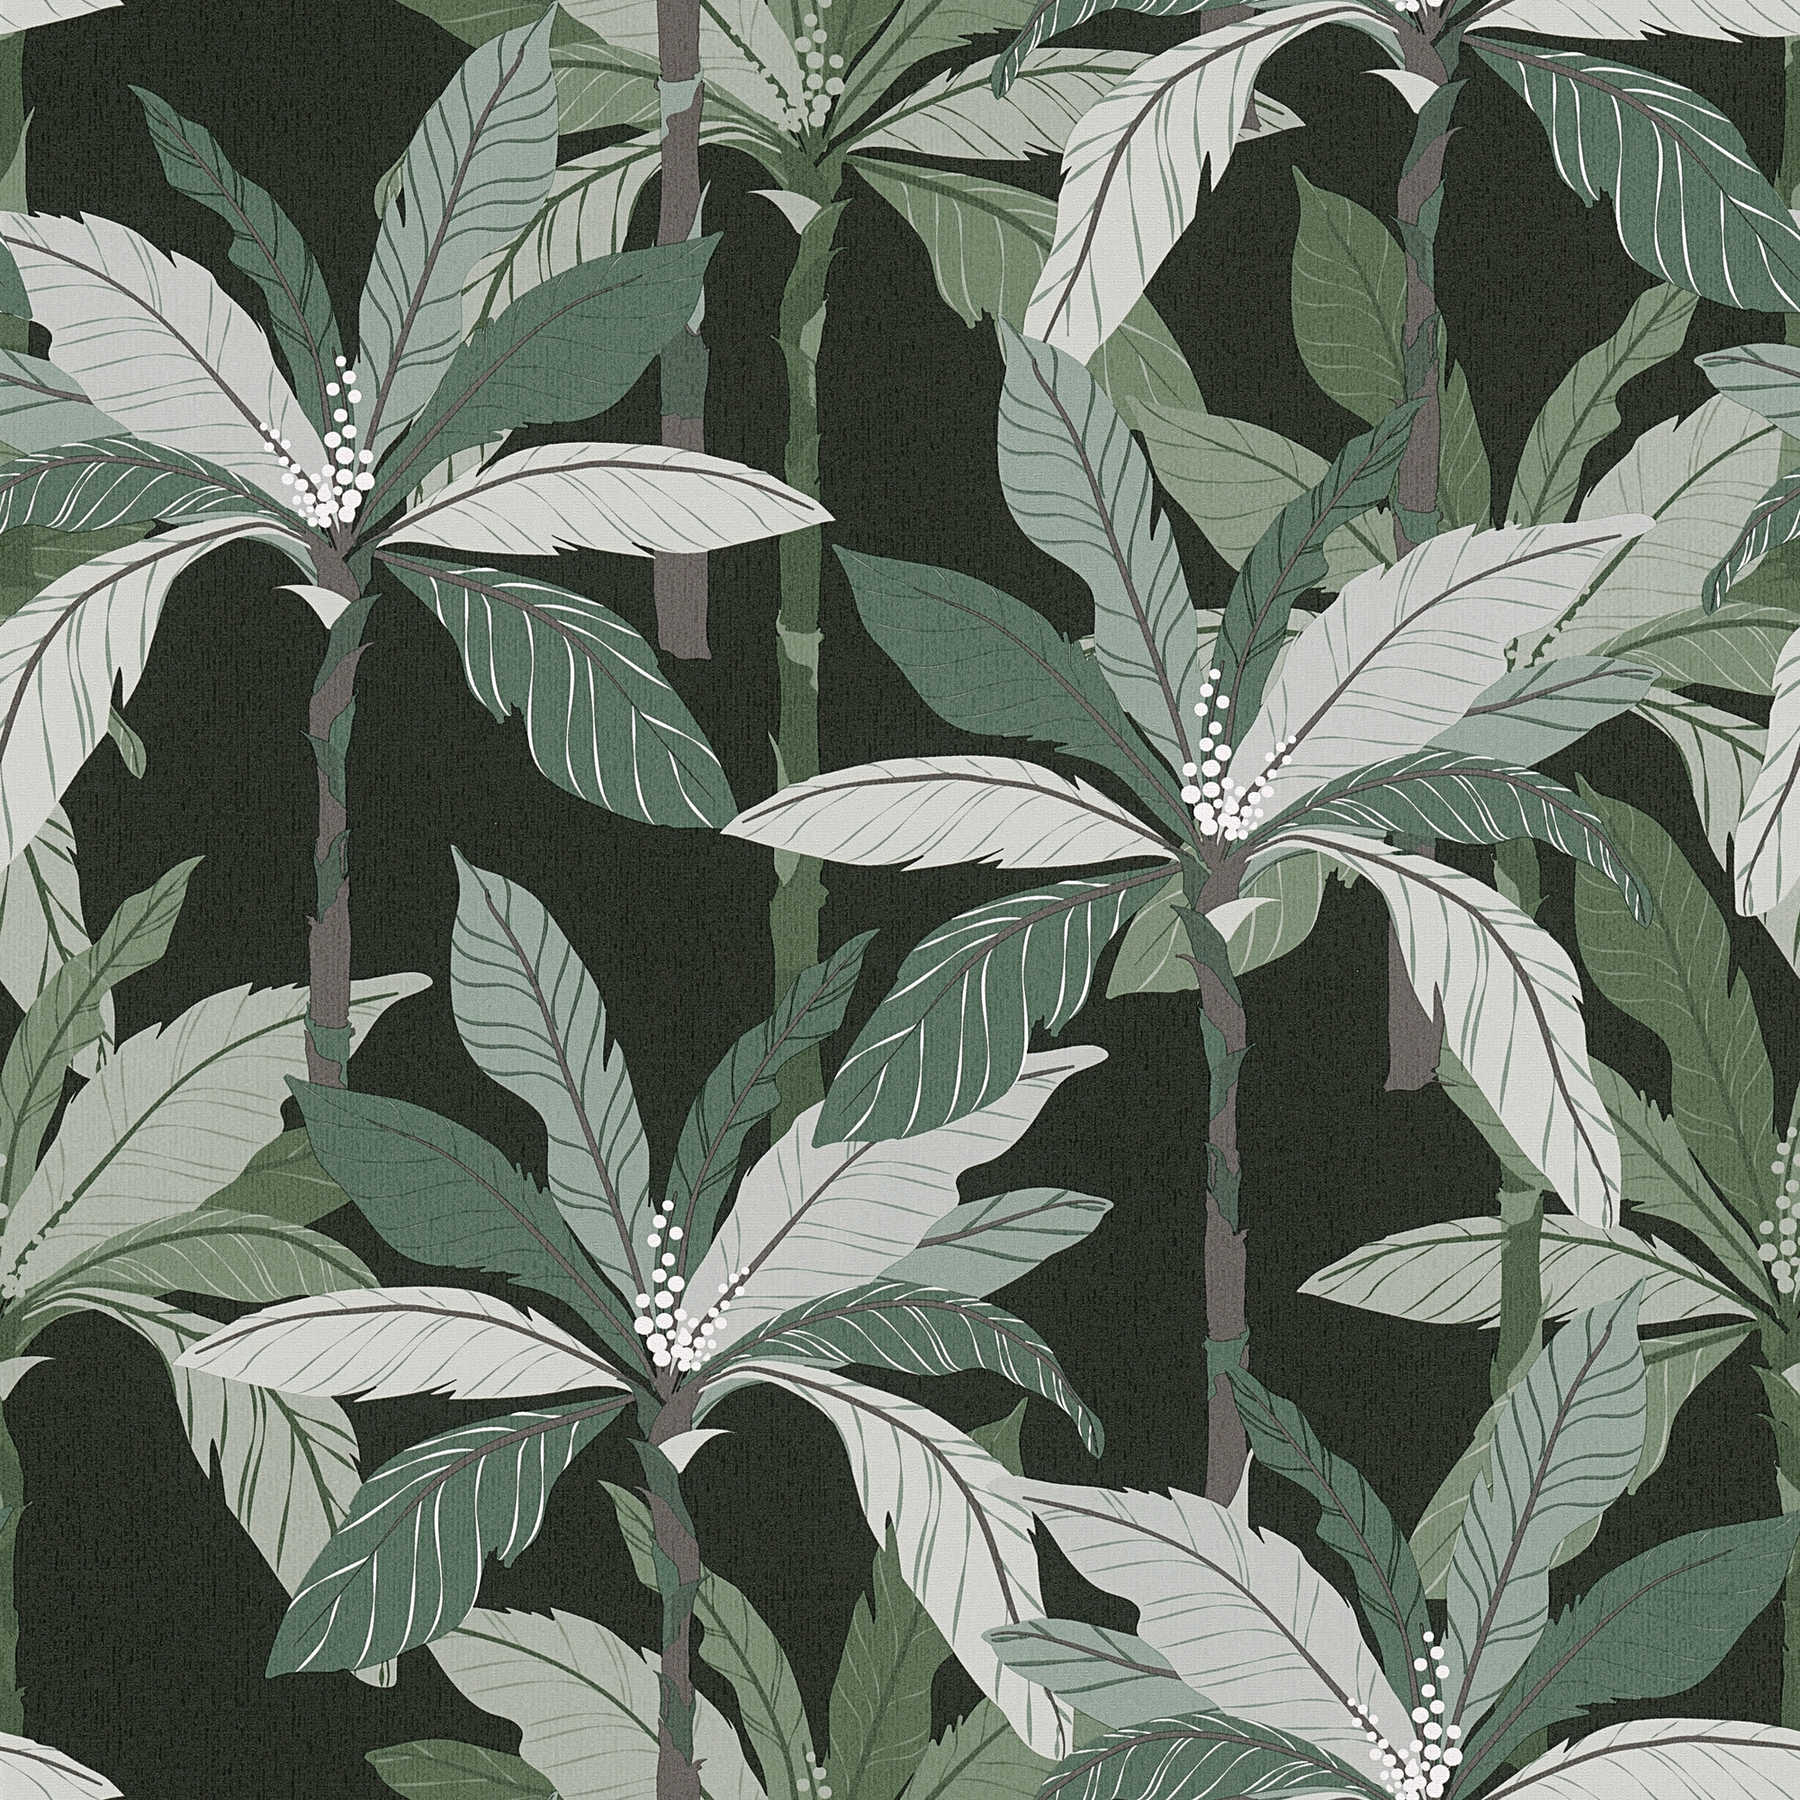 Tropics wallpaper with palm tree design - green, black
